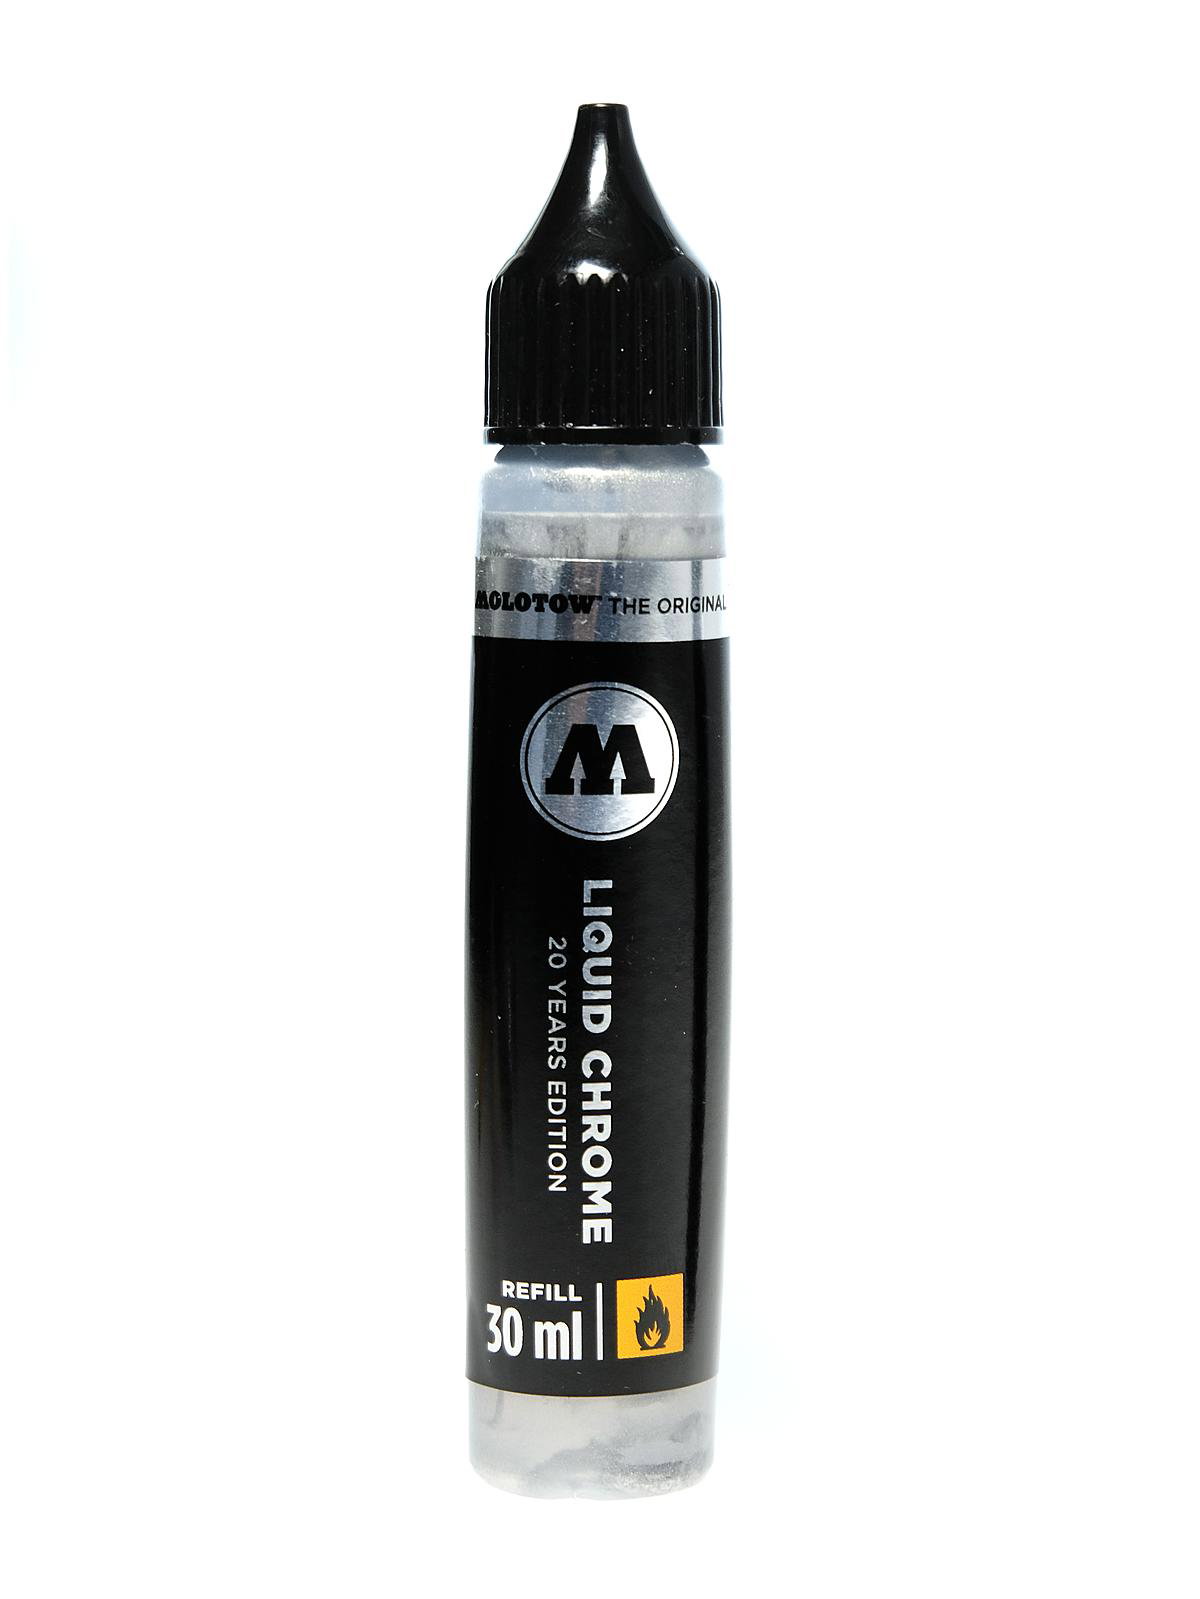 Molotow : Liquid Chrome : 20 Year Edition Pump Marker Refill